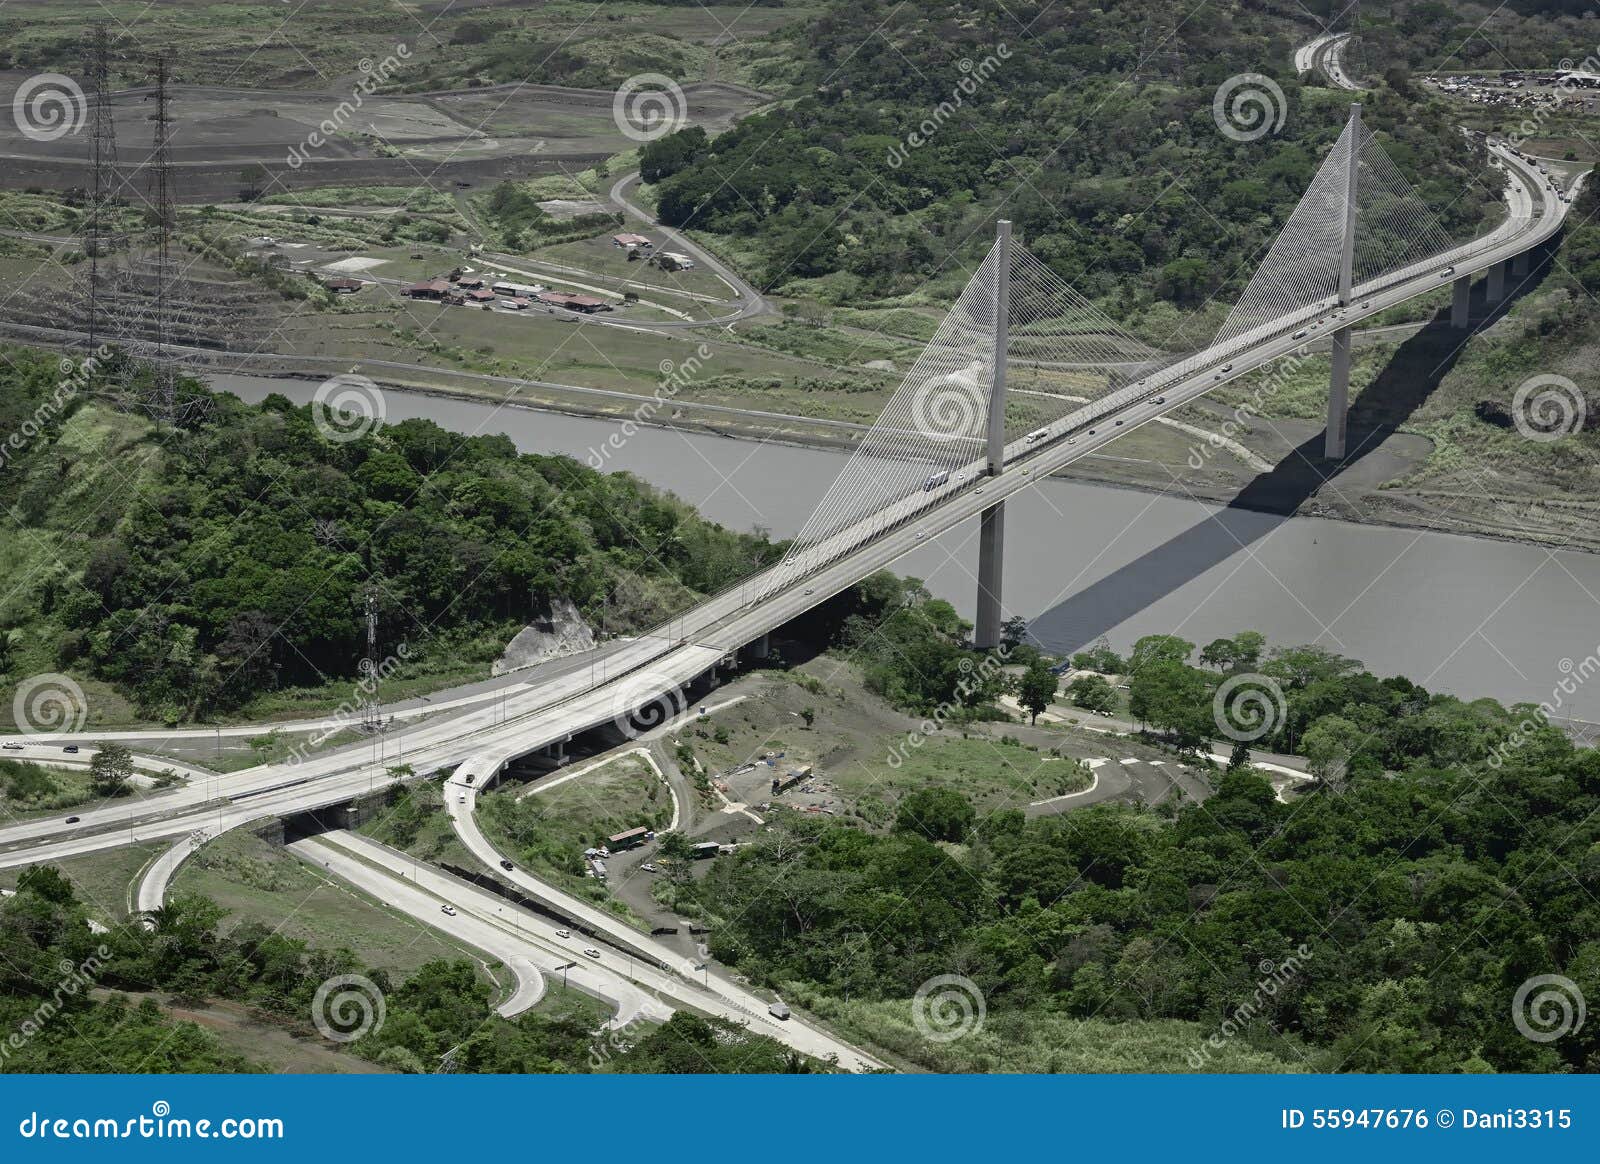 panama's centennial bridge